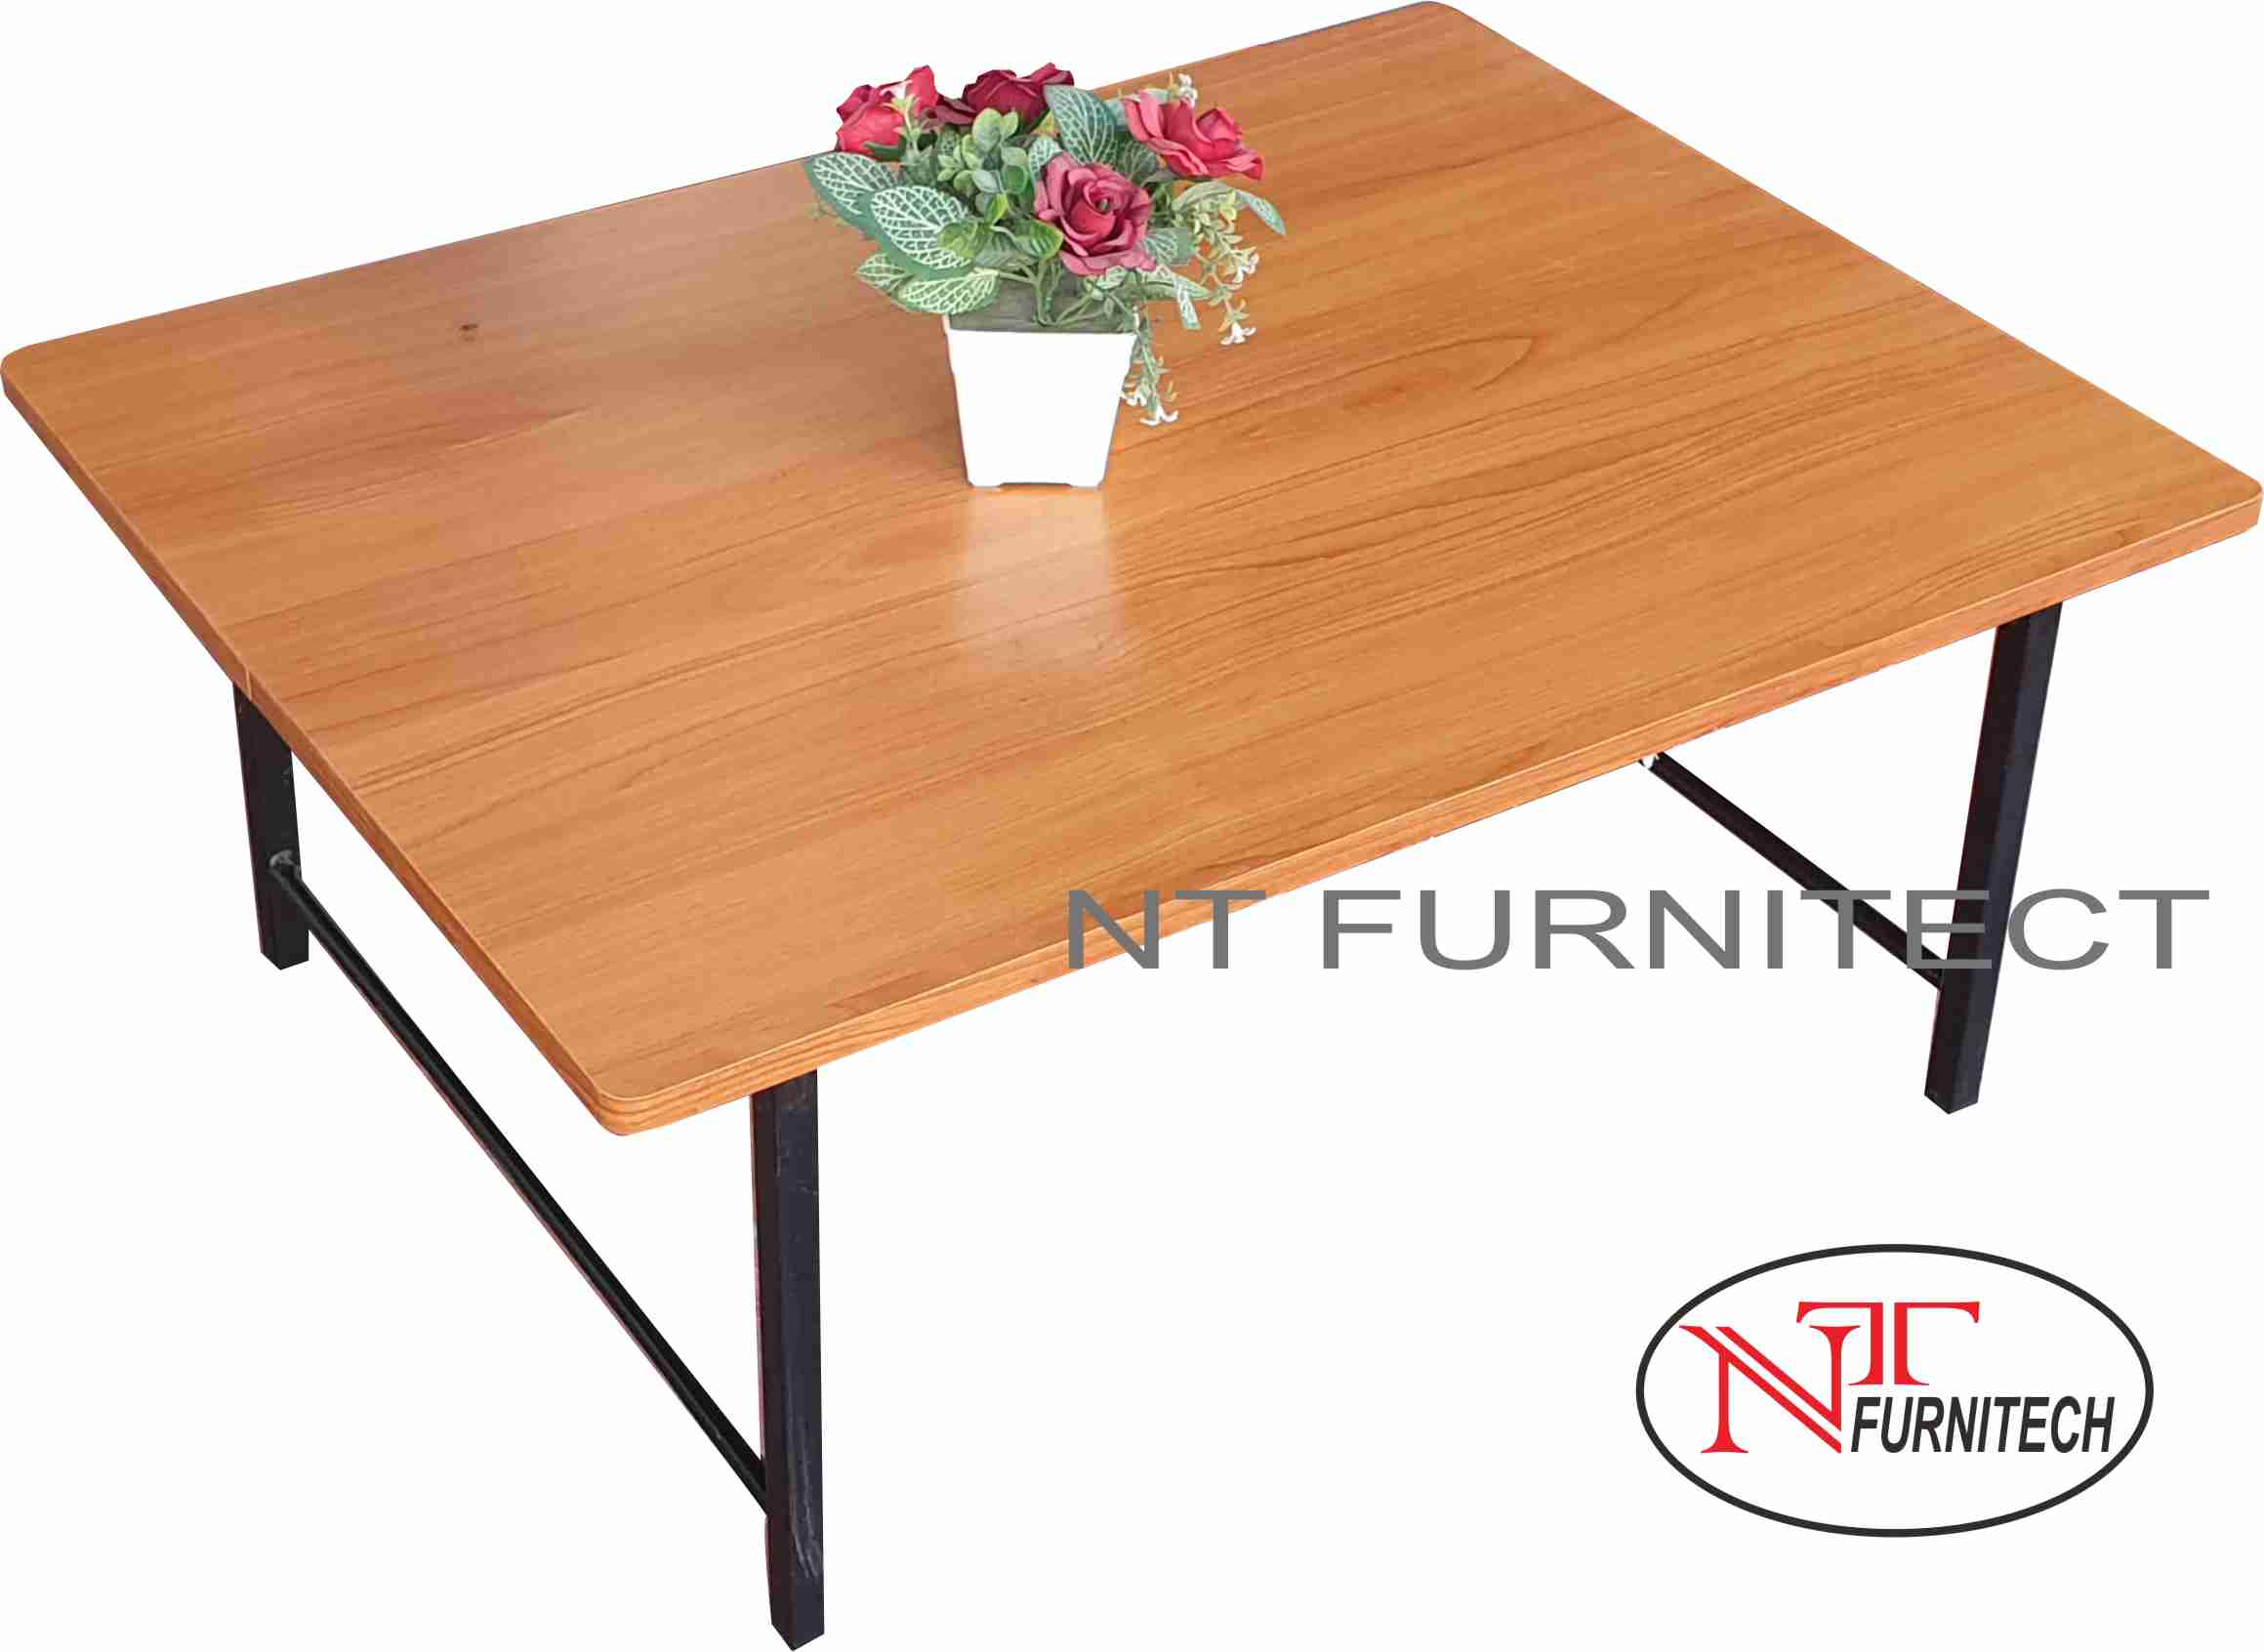 Nt furnitech โต๊ะพับญี่ปุ่น โต๊ะกลาง โต๊ะข้าง ท๊อปเมลามีน รุ่น ขาเหล็ก ่ขนาด ก.80 ล.60 ส.33 ซม. (สีเชอรี่)